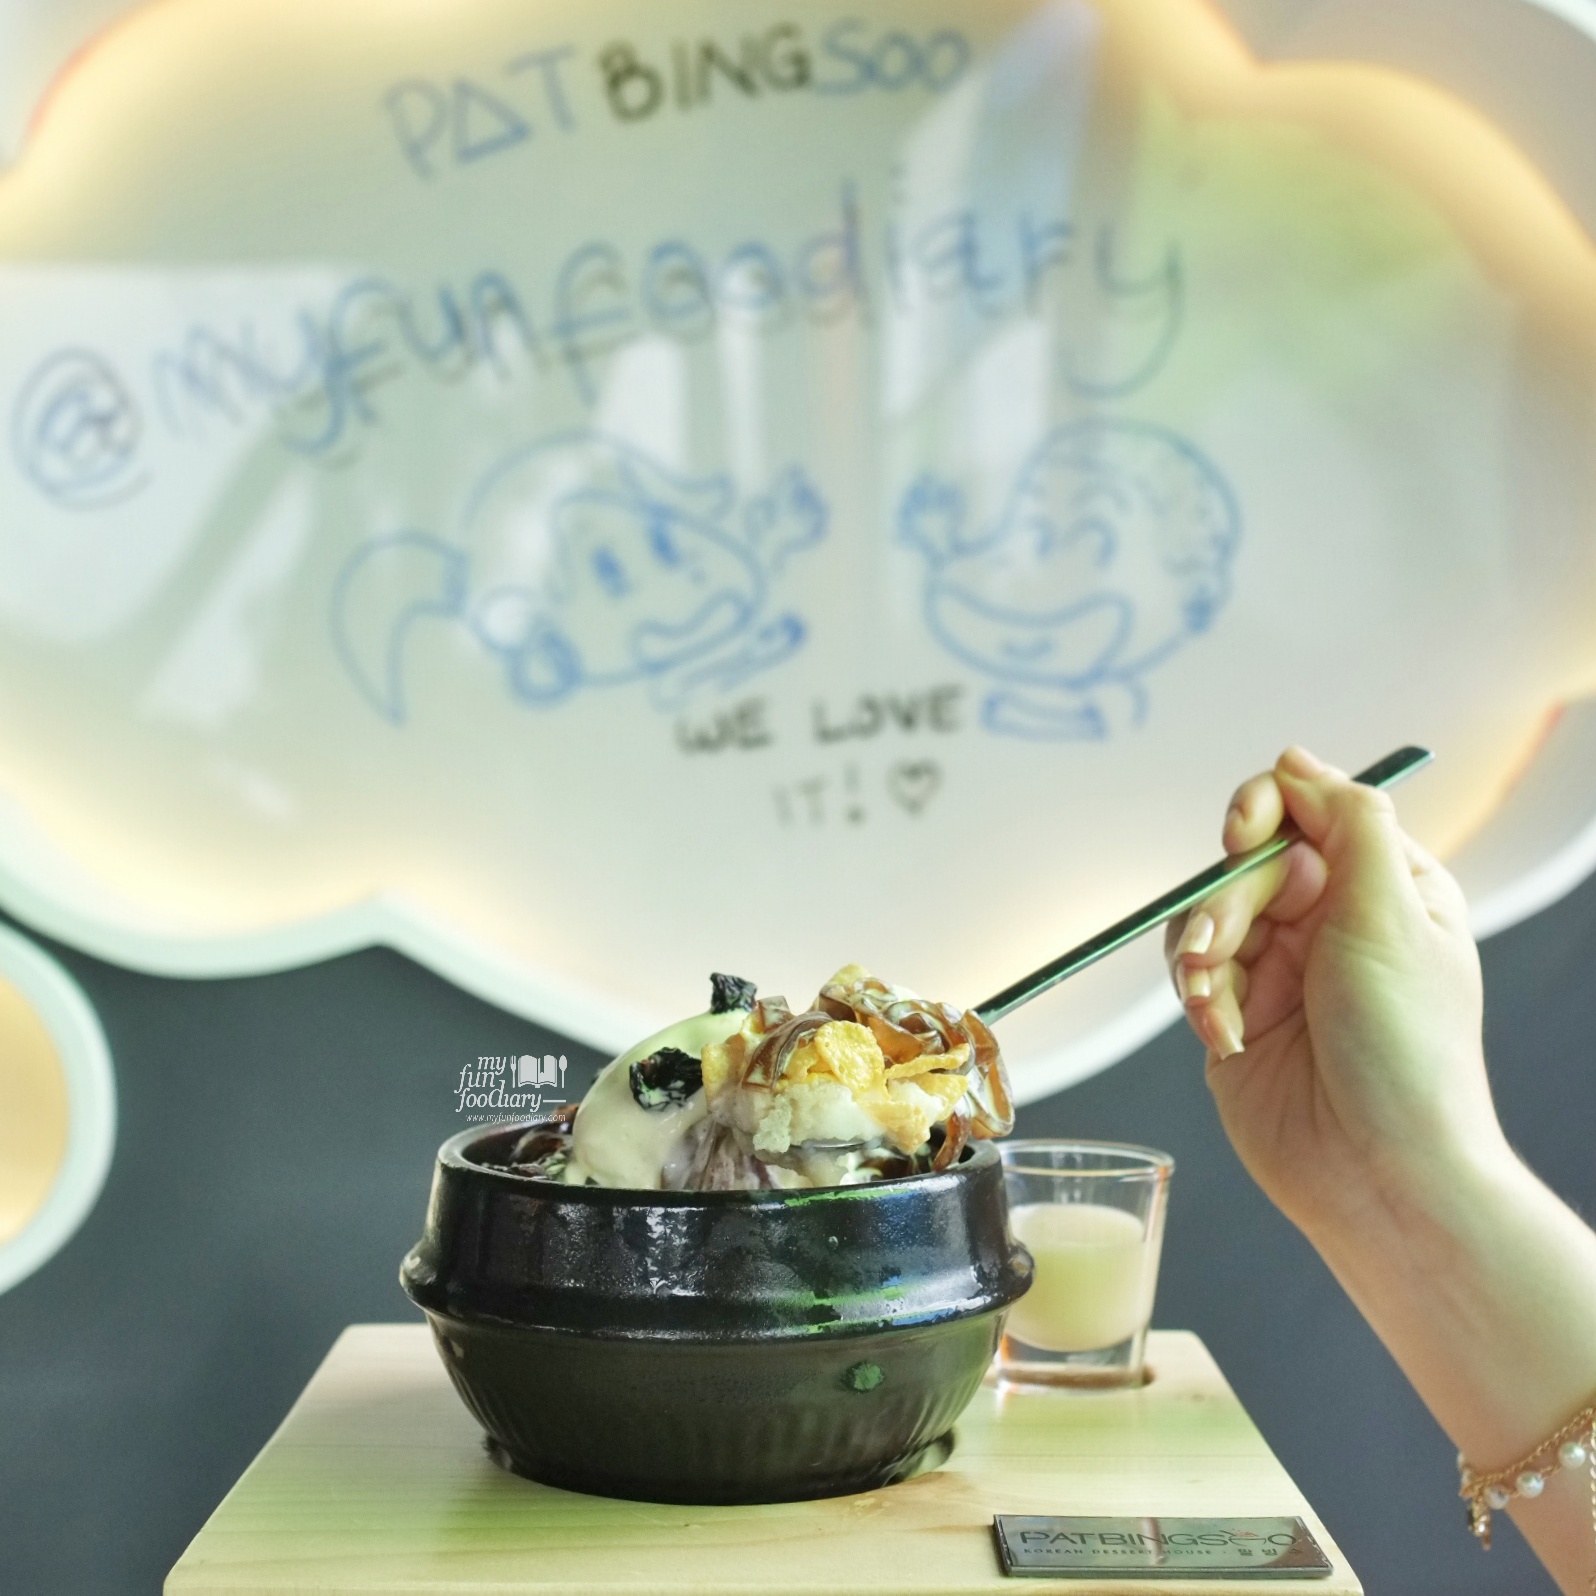 Namdaemun Bingsoo at Pat Bing Soo Korean Dessert House by Myfunfoodiary 01